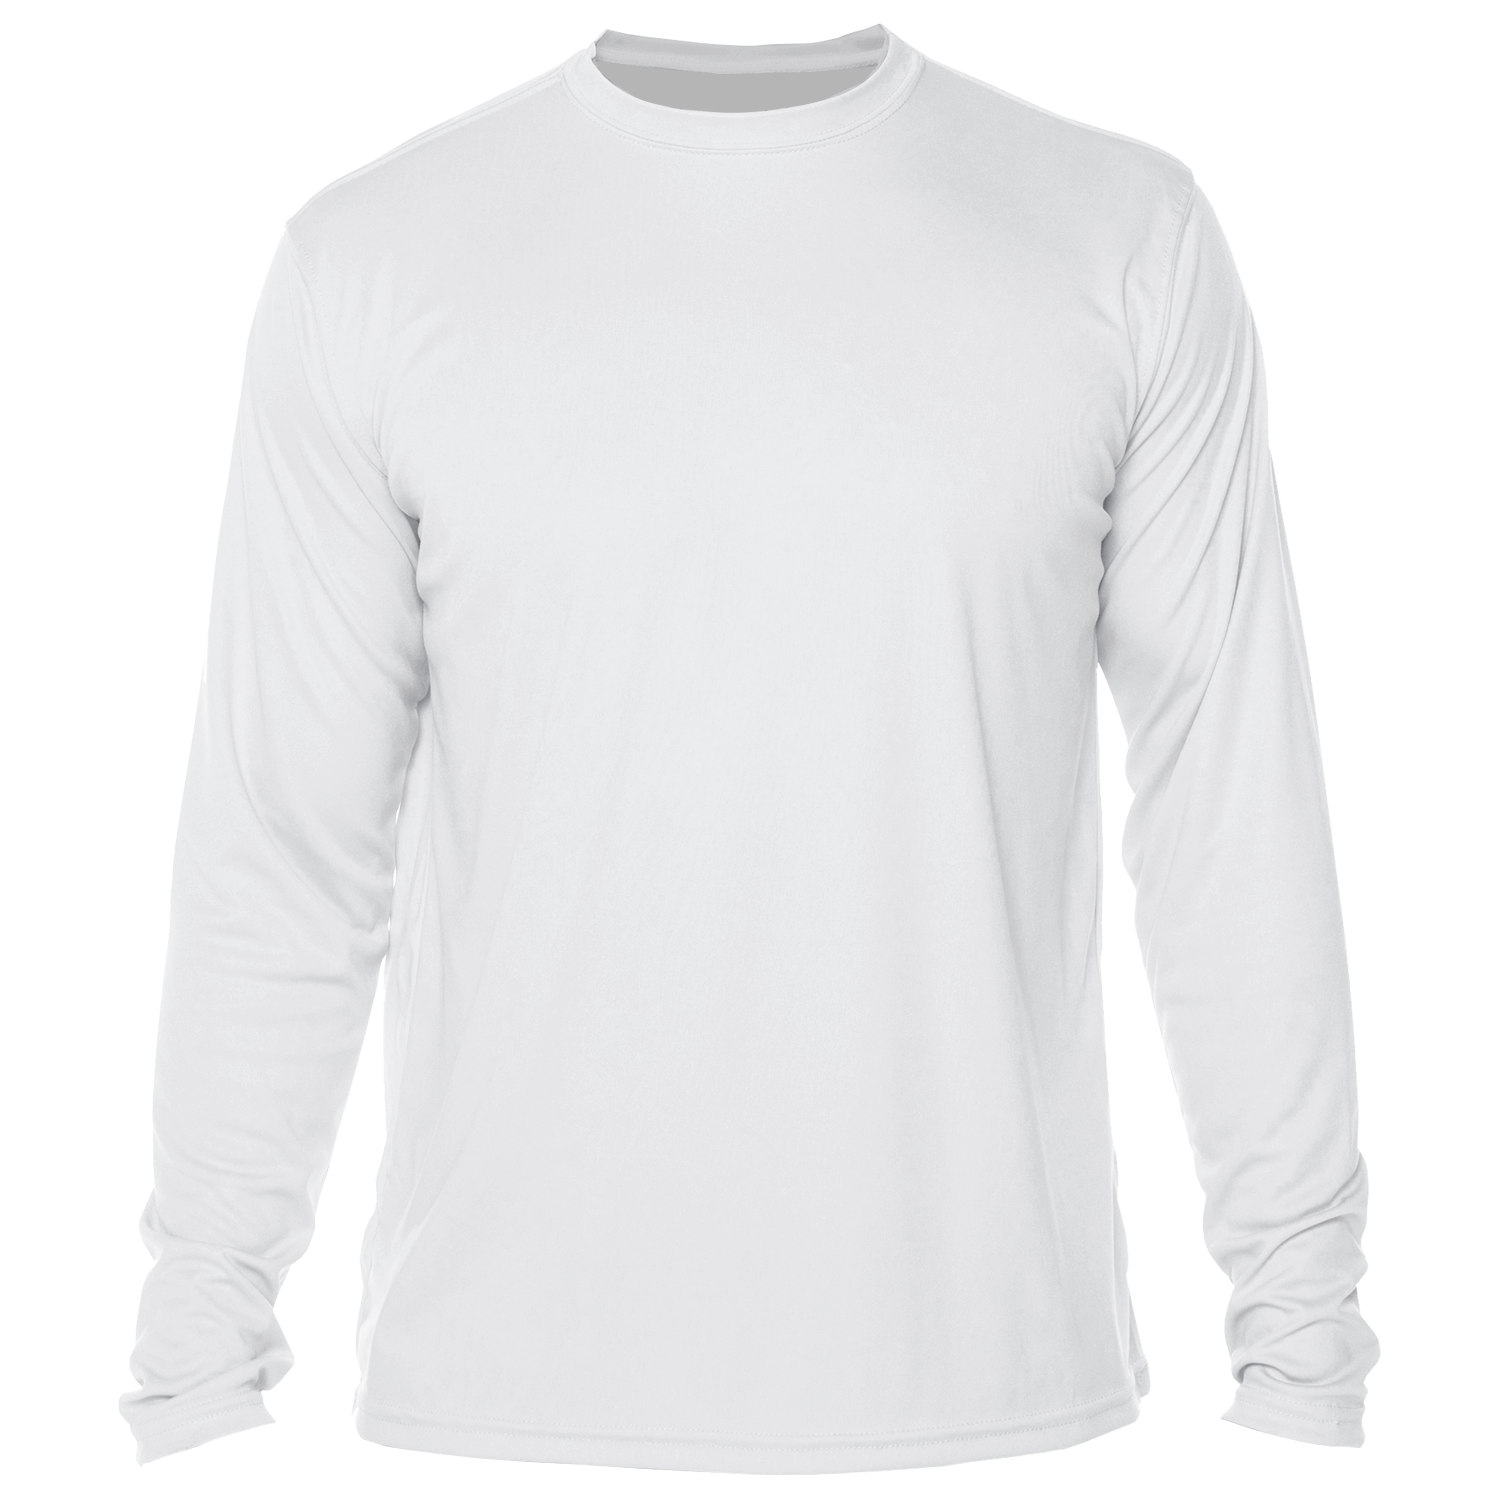 Key West Sun Shirts - Solid UPF 50+ Long Sleeve - white / xs